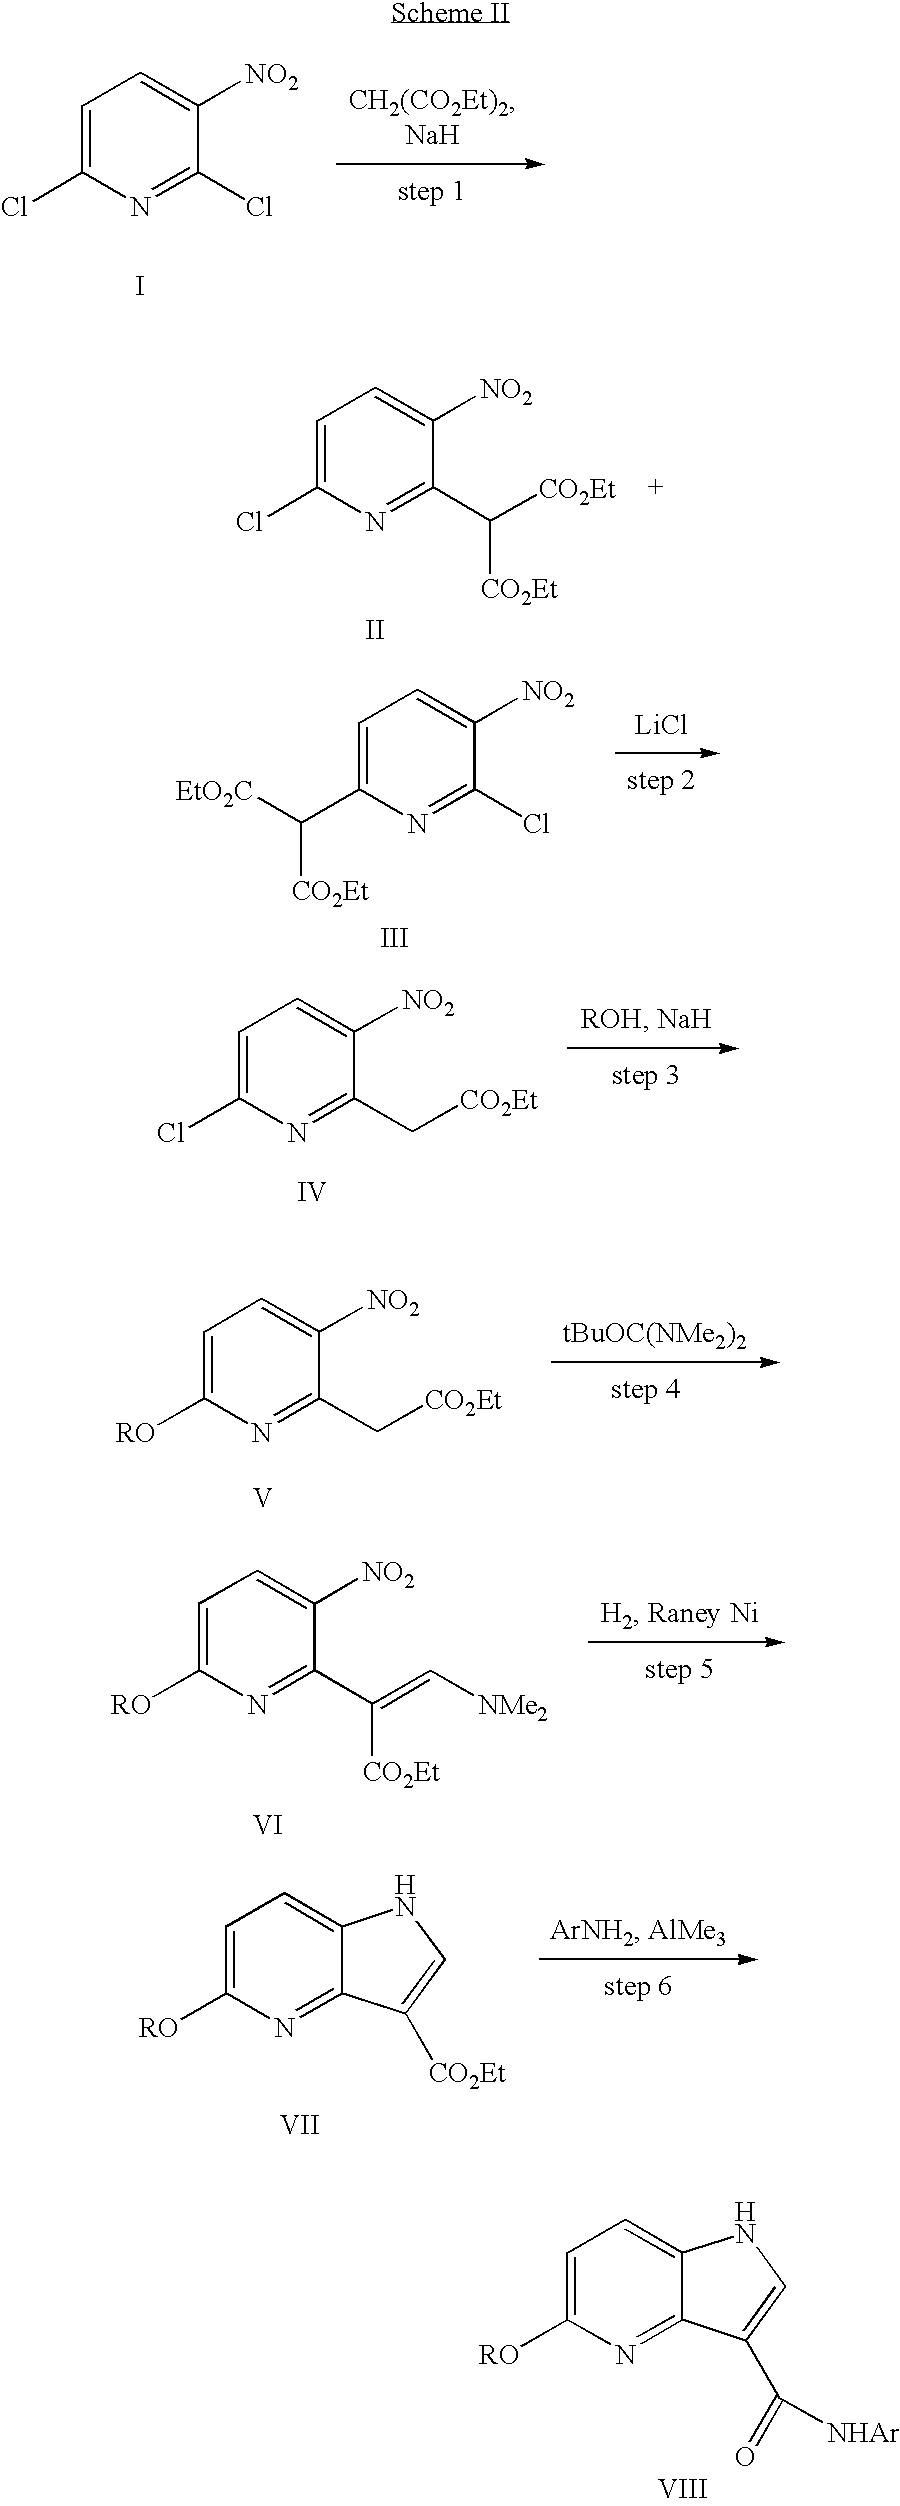 1H-pyrrolo [3,2-b] pyridine-3-carboxylic acid amines as GABAA receptor ligands